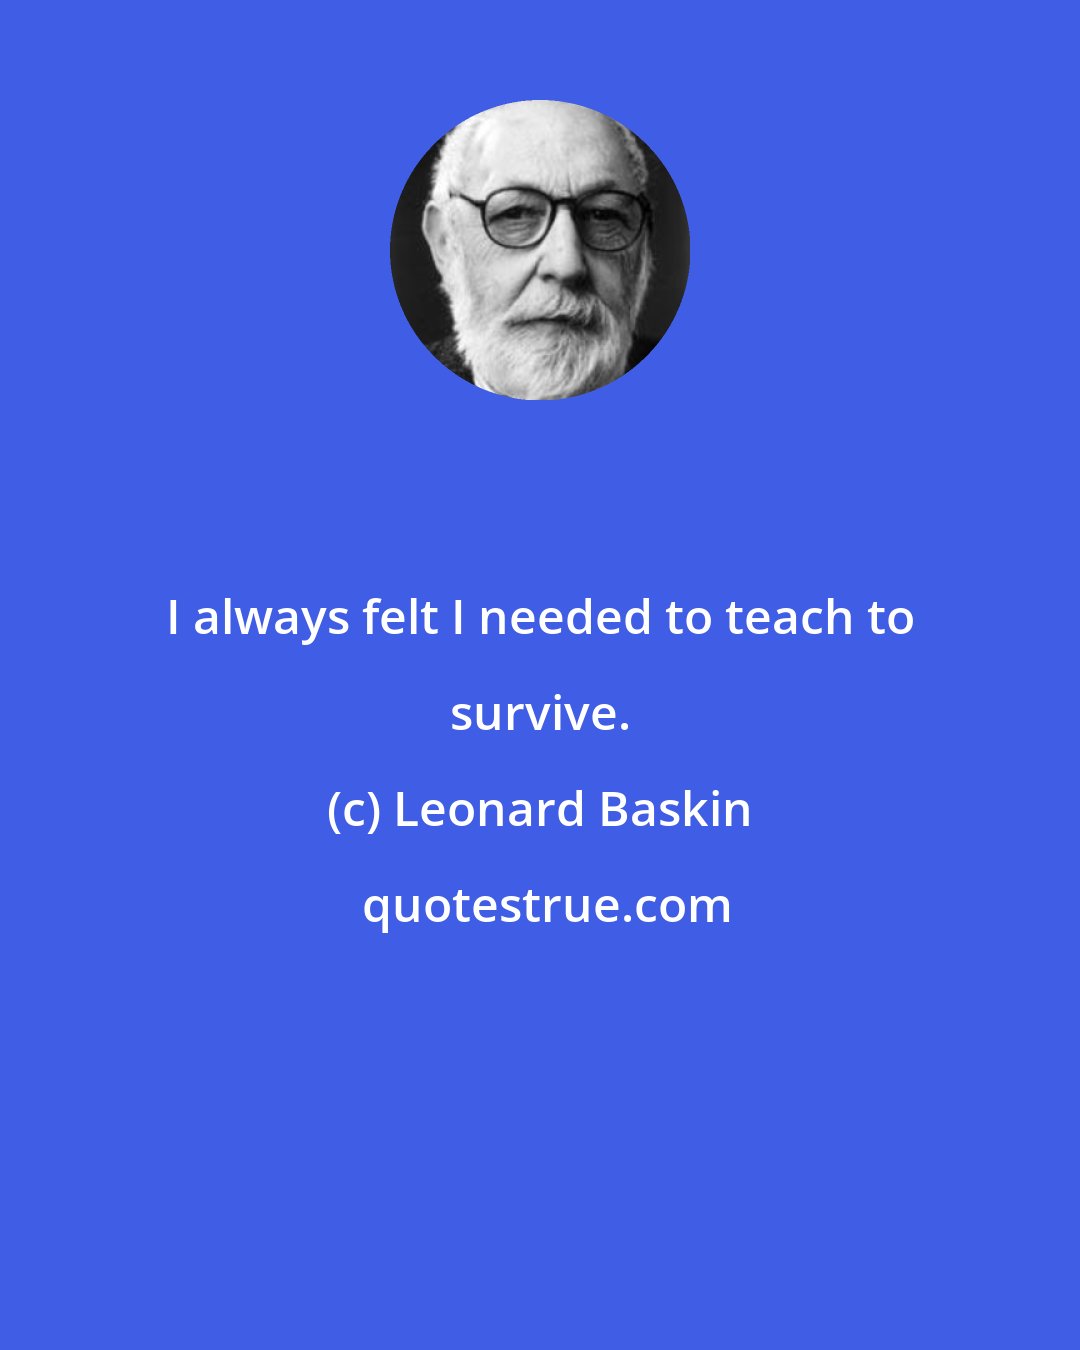 Leonard Baskin: I always felt I needed to teach to survive.